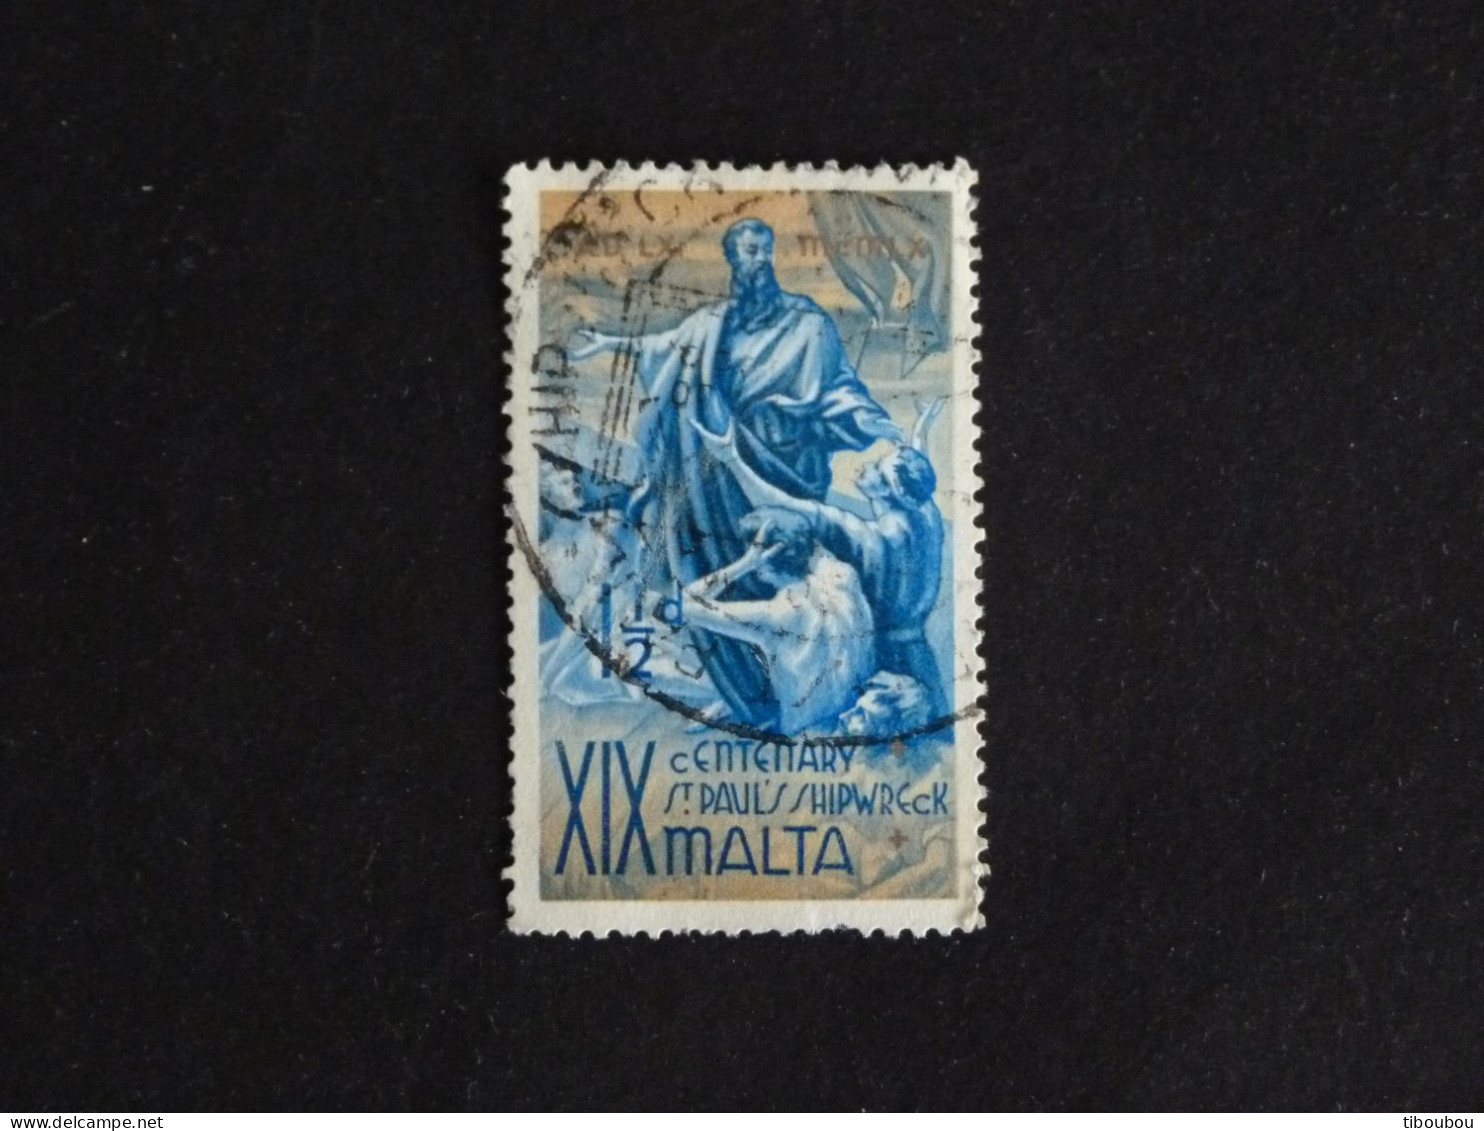 MALTE MALTA YT 268 OBLITERE - NAUFRAGE DE SAINT PAUL - Malta